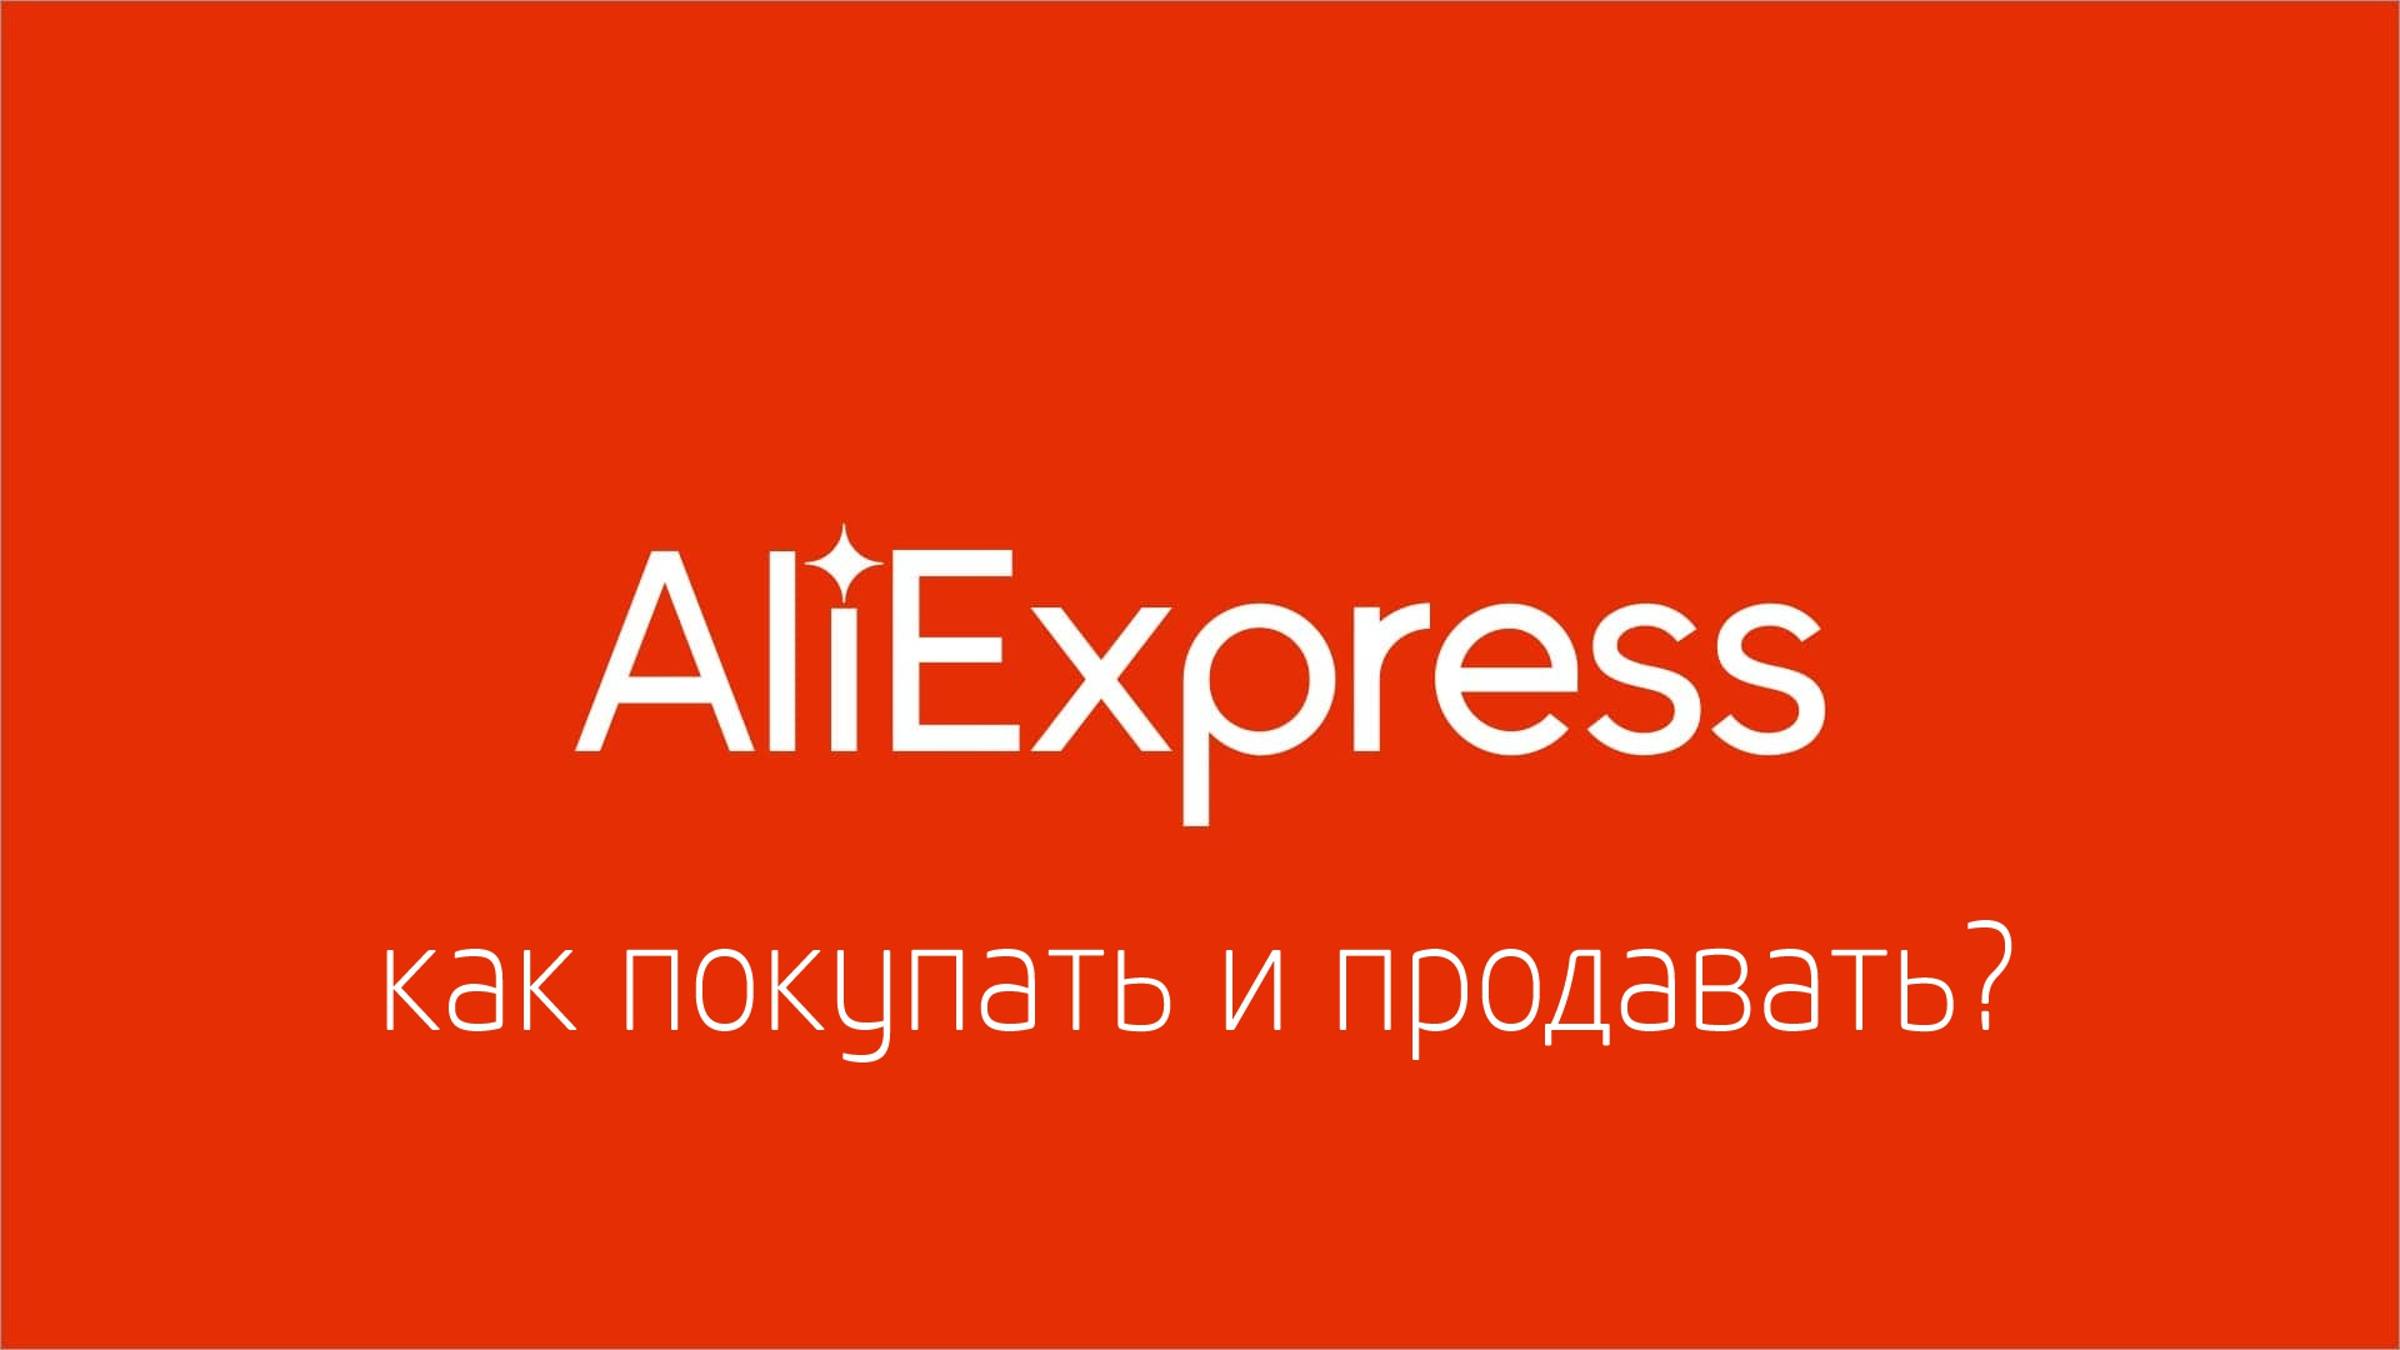 BEKKERPRO | PROBUSINESS: Как продавать и покупать на AliExpress